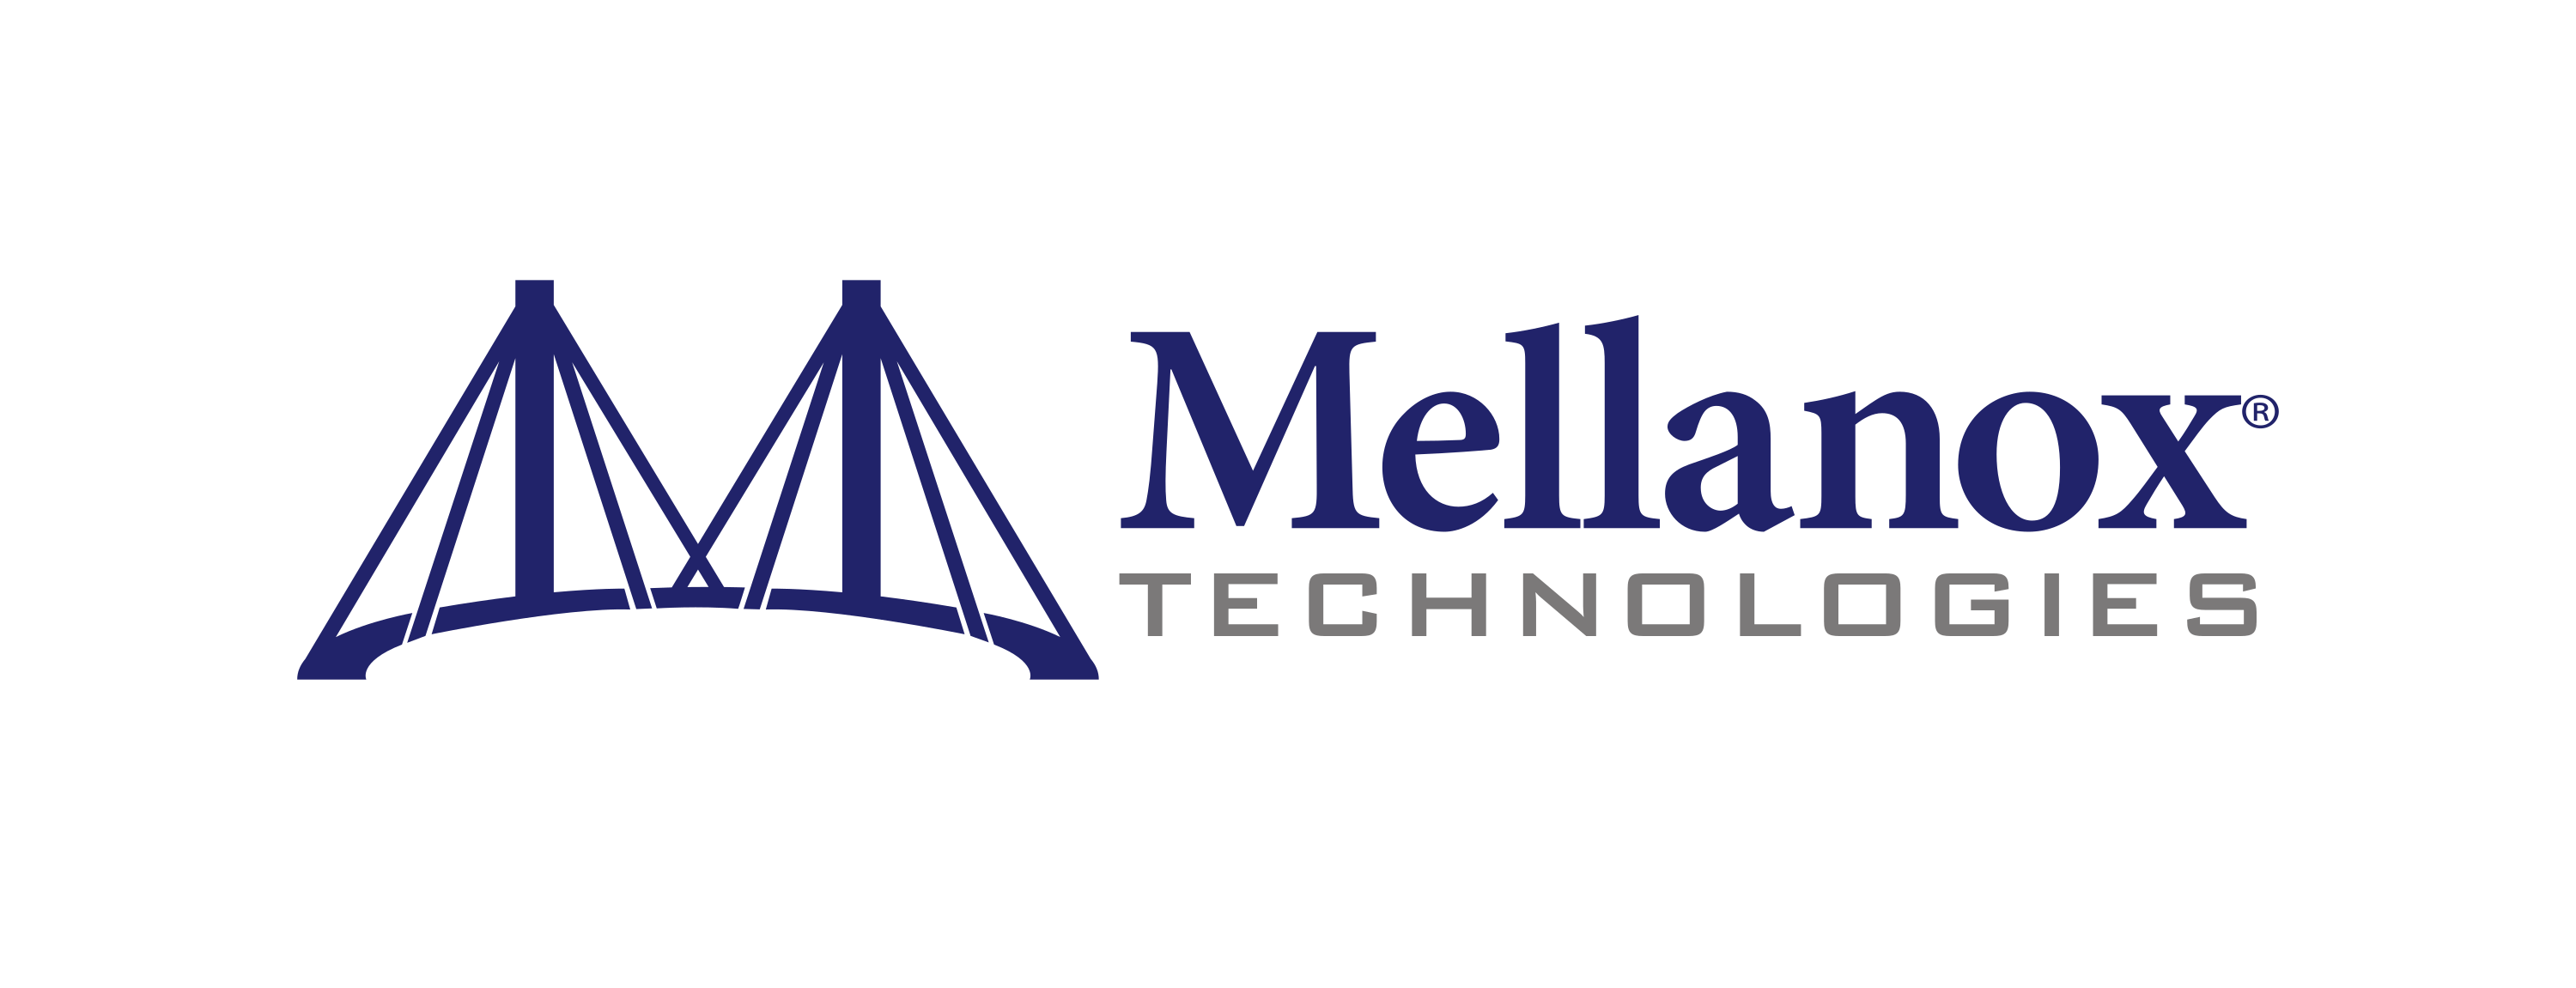 Mellanox Technologies Logowine